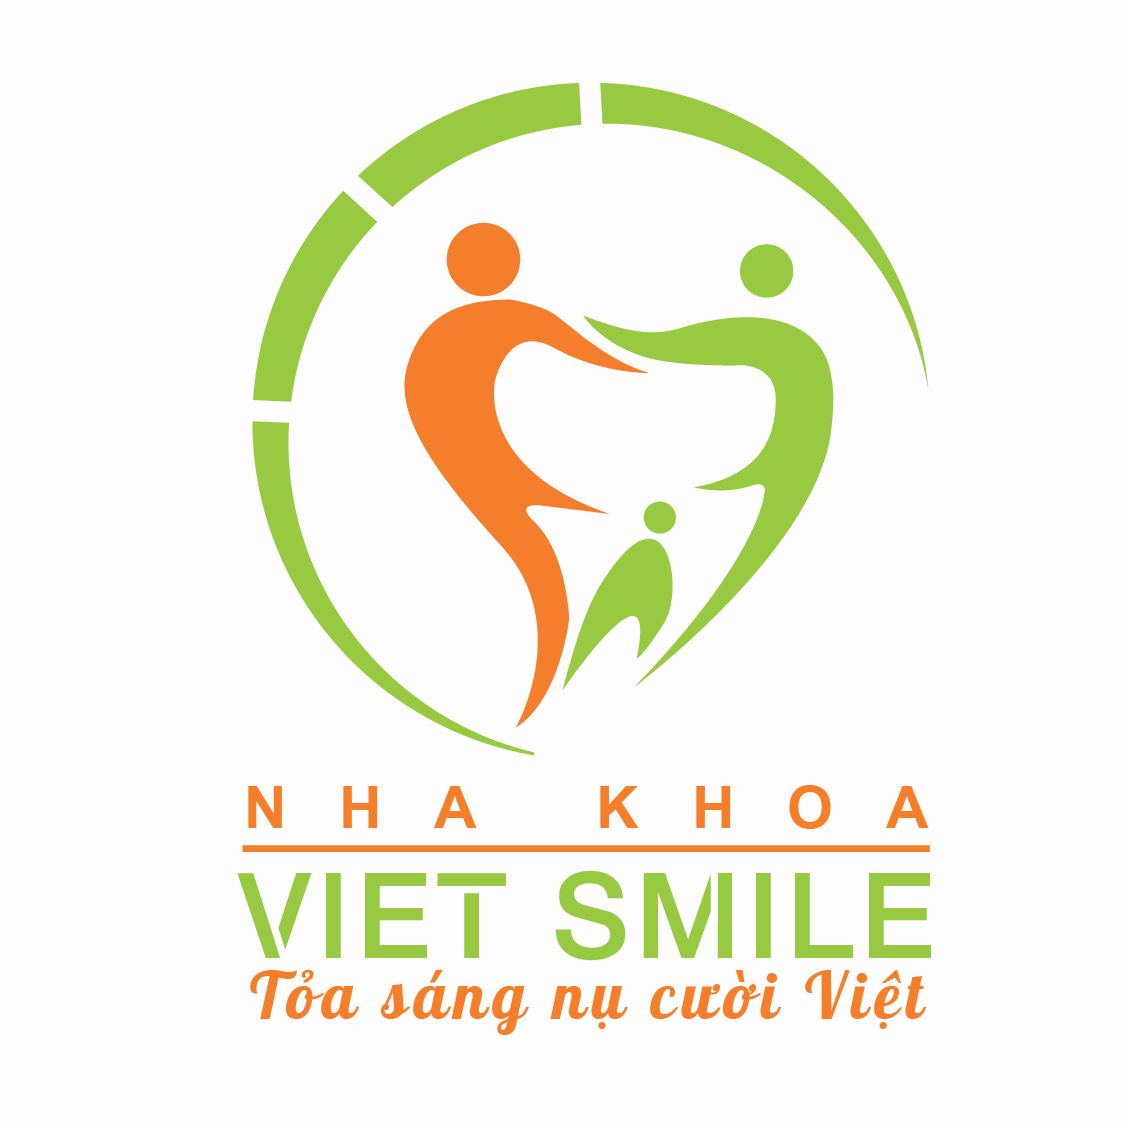 Viet Smile